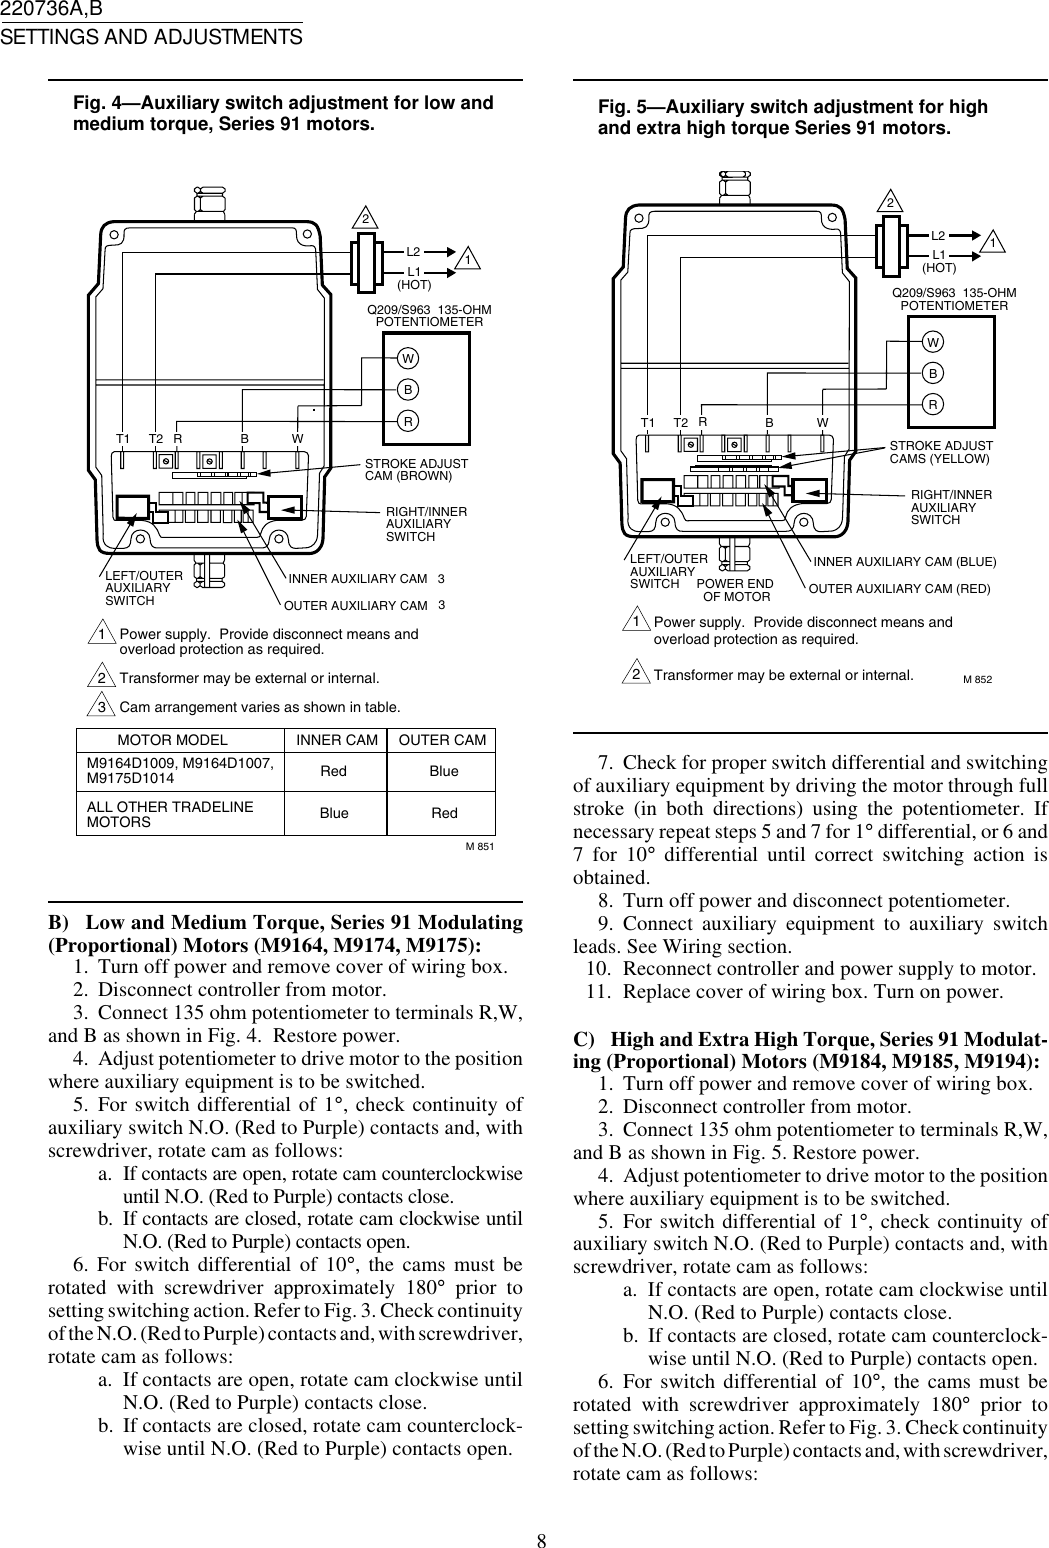 Page 8 of 12 - Honeywell Honeywell-Honeywell-Switch-220736B-Users-Manual- 63-2228220736 INTERNAL AUXILIARY SWITCH  Honeywell-honeywell-switch-220736b-users-manual